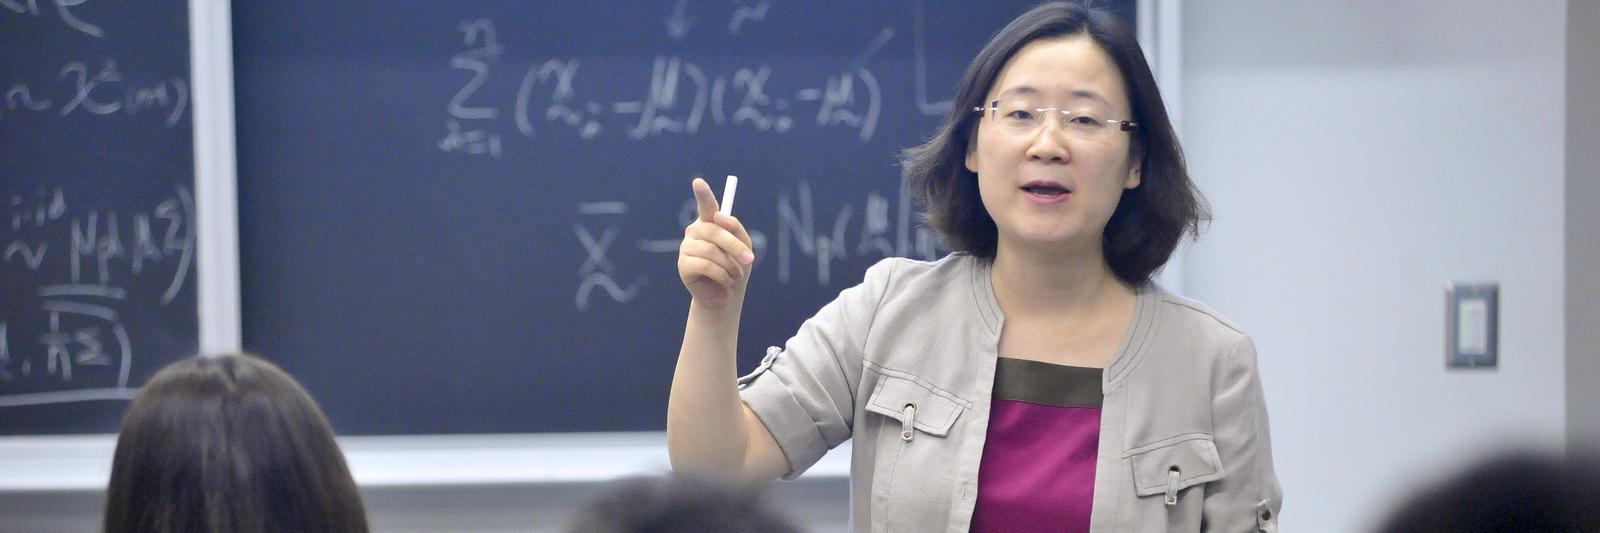 Professor Kang teaching students